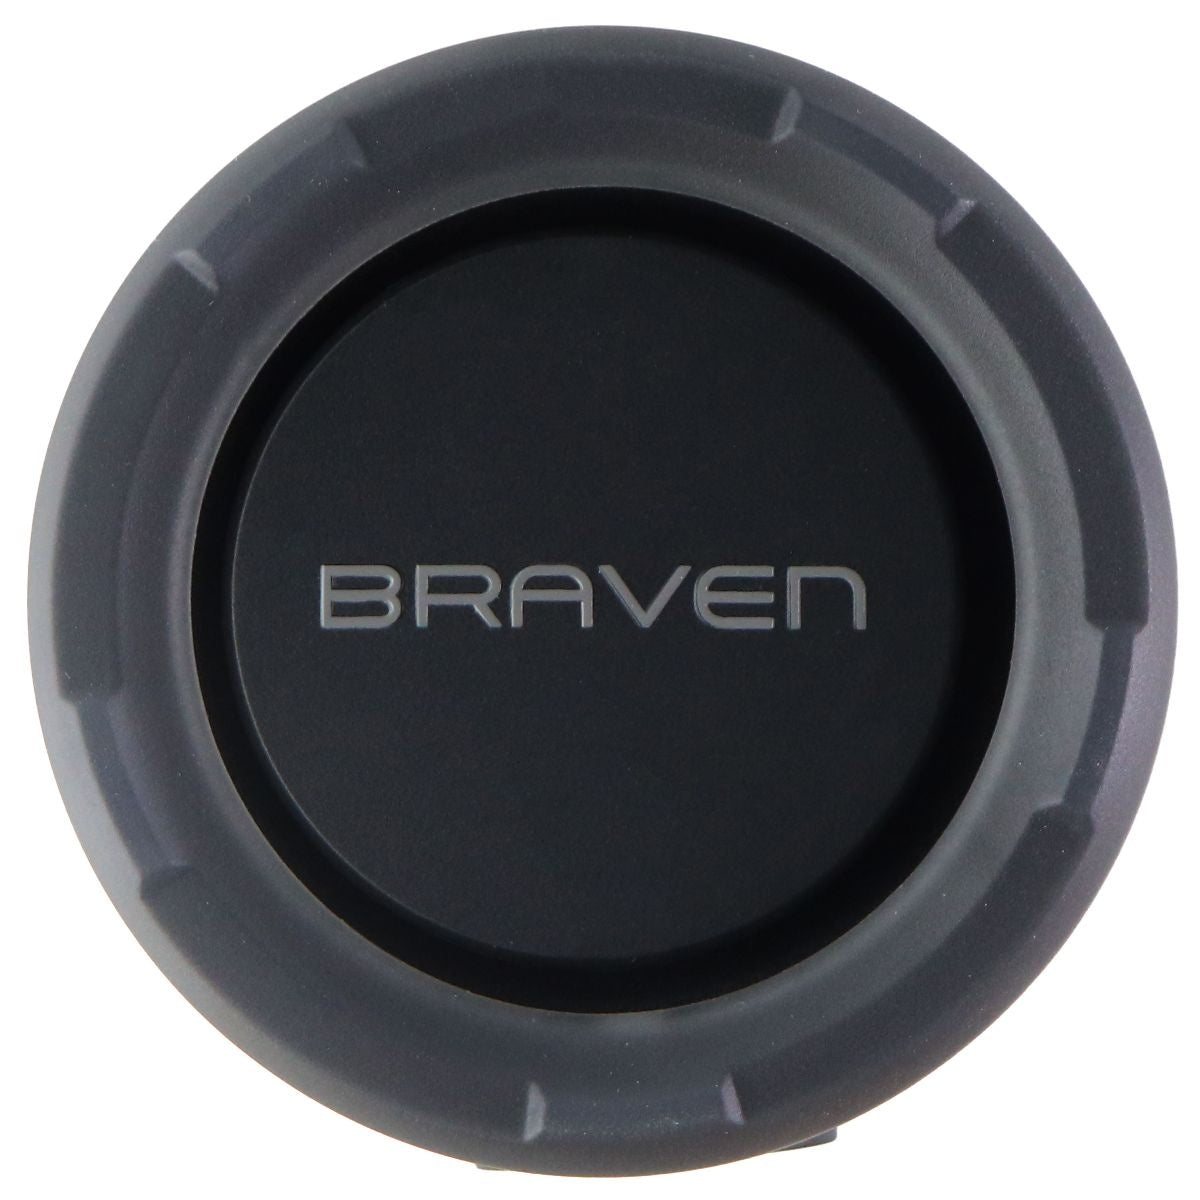 Braven 360 Wireless Speaker